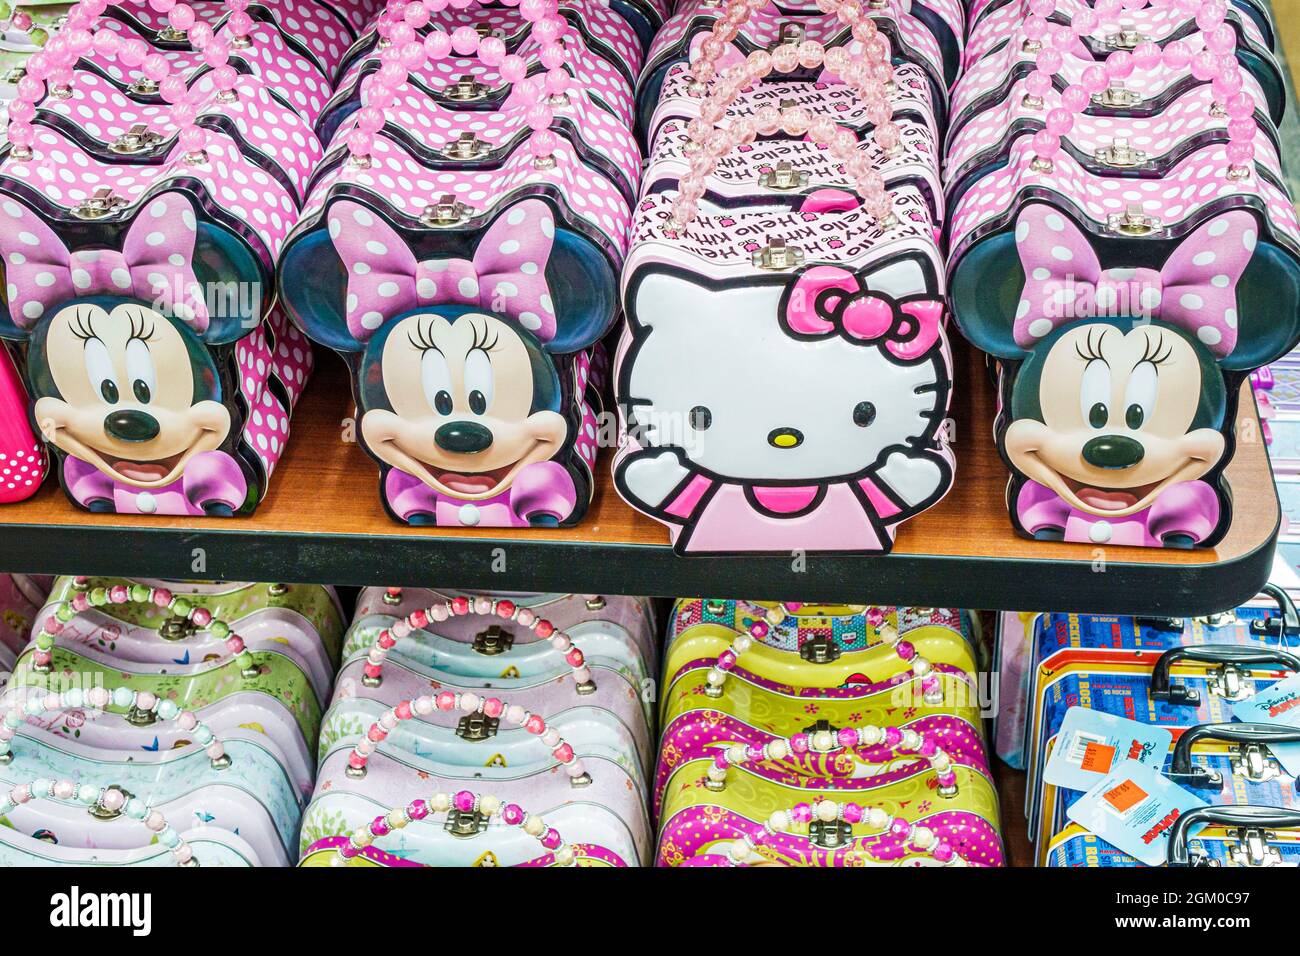 Kissimmee Florida,Orlando shopping shop store,Crazy Wizard Gift Shop,souvenirs Minnie Mouse Hello Kitty pocketbooks purses Stock Photo